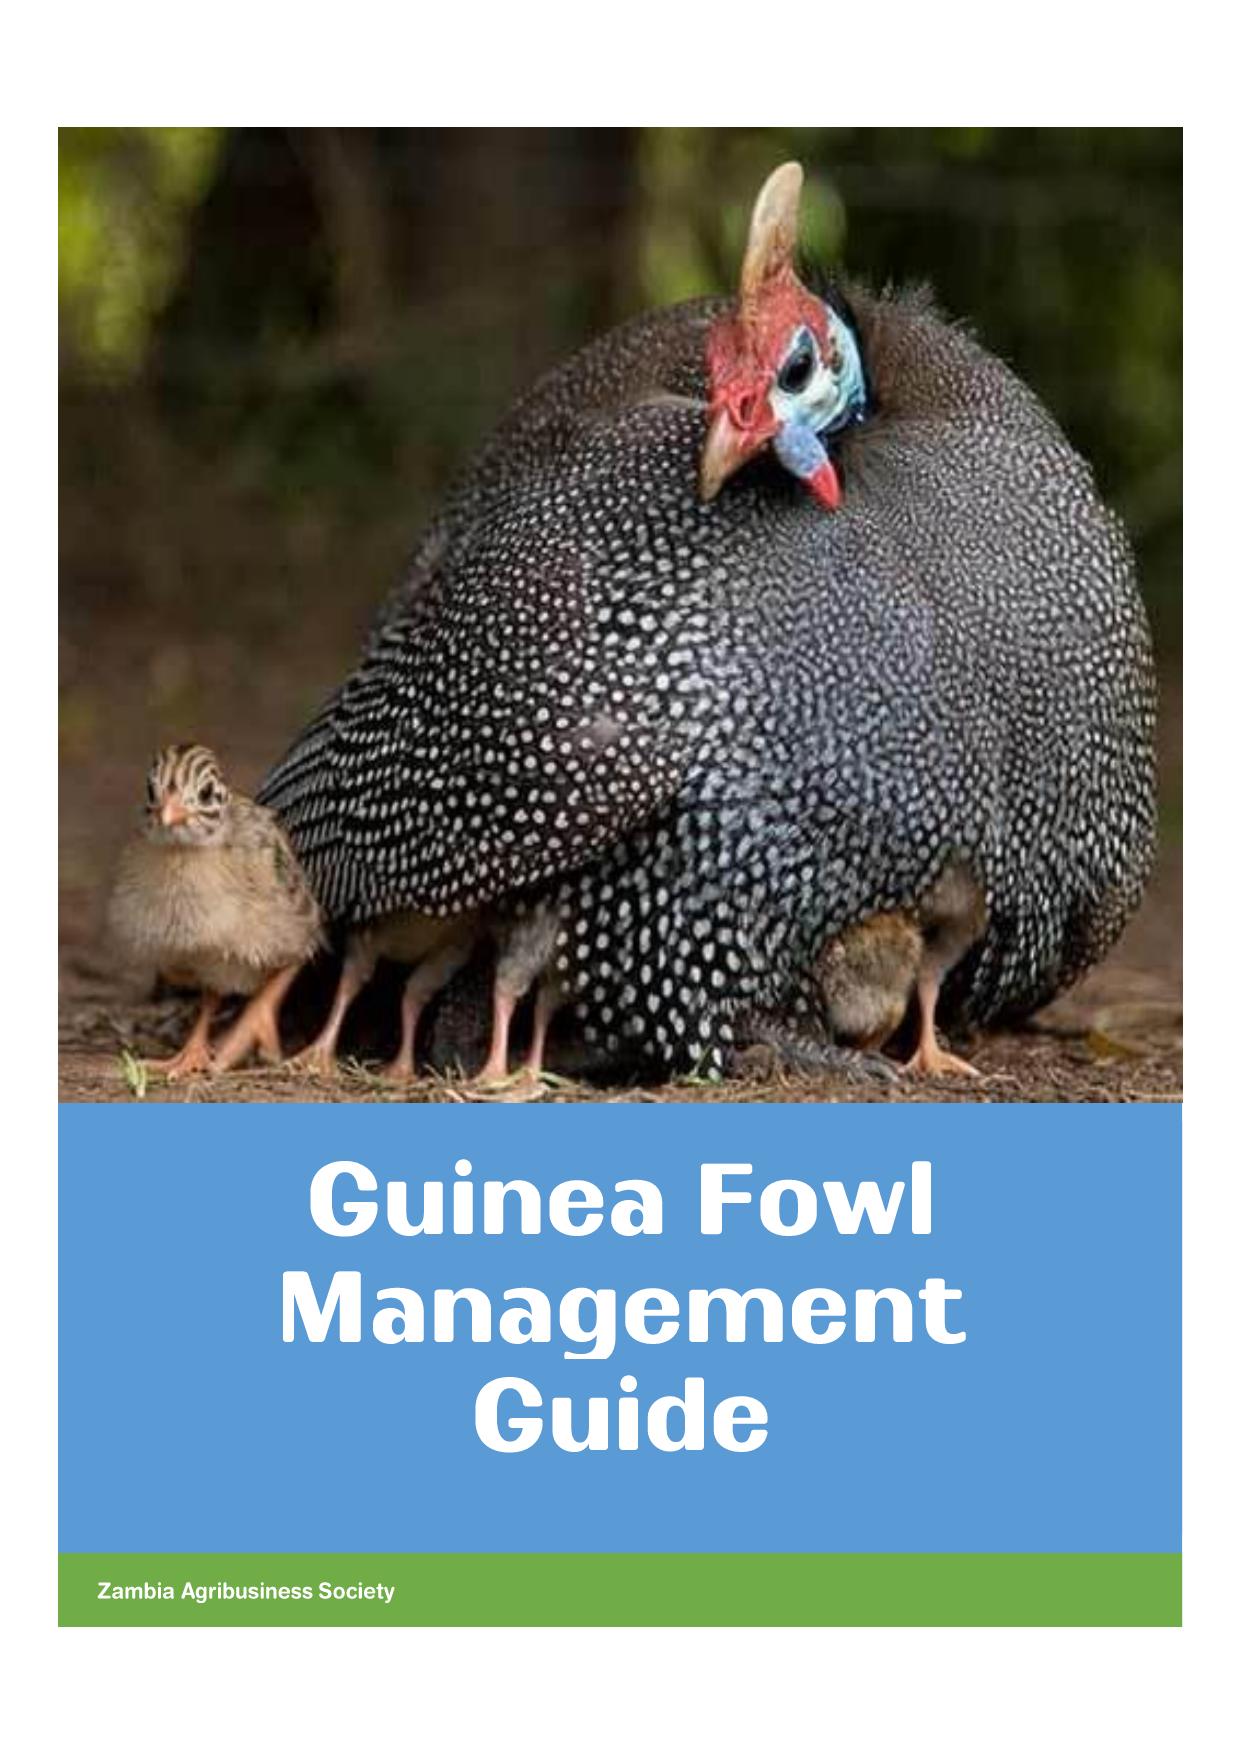 Guinea Fowl Management Guide